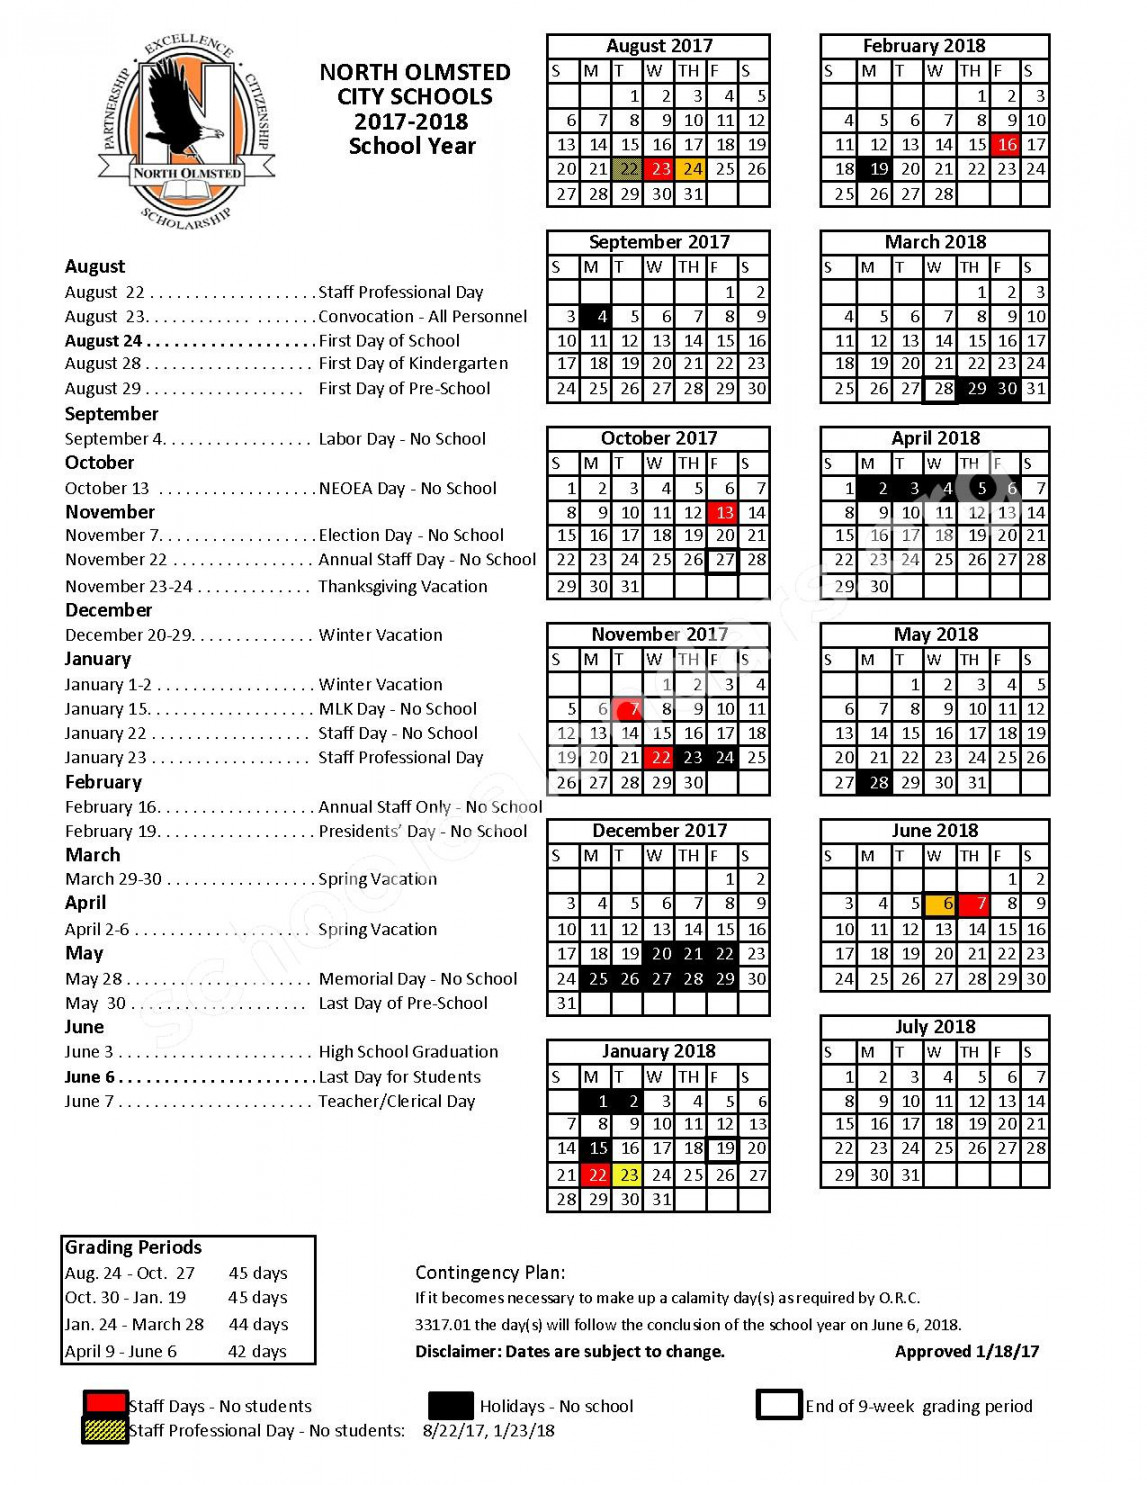 Chestnut Intermediate Elementary School Calendars – North Olmsted, OH